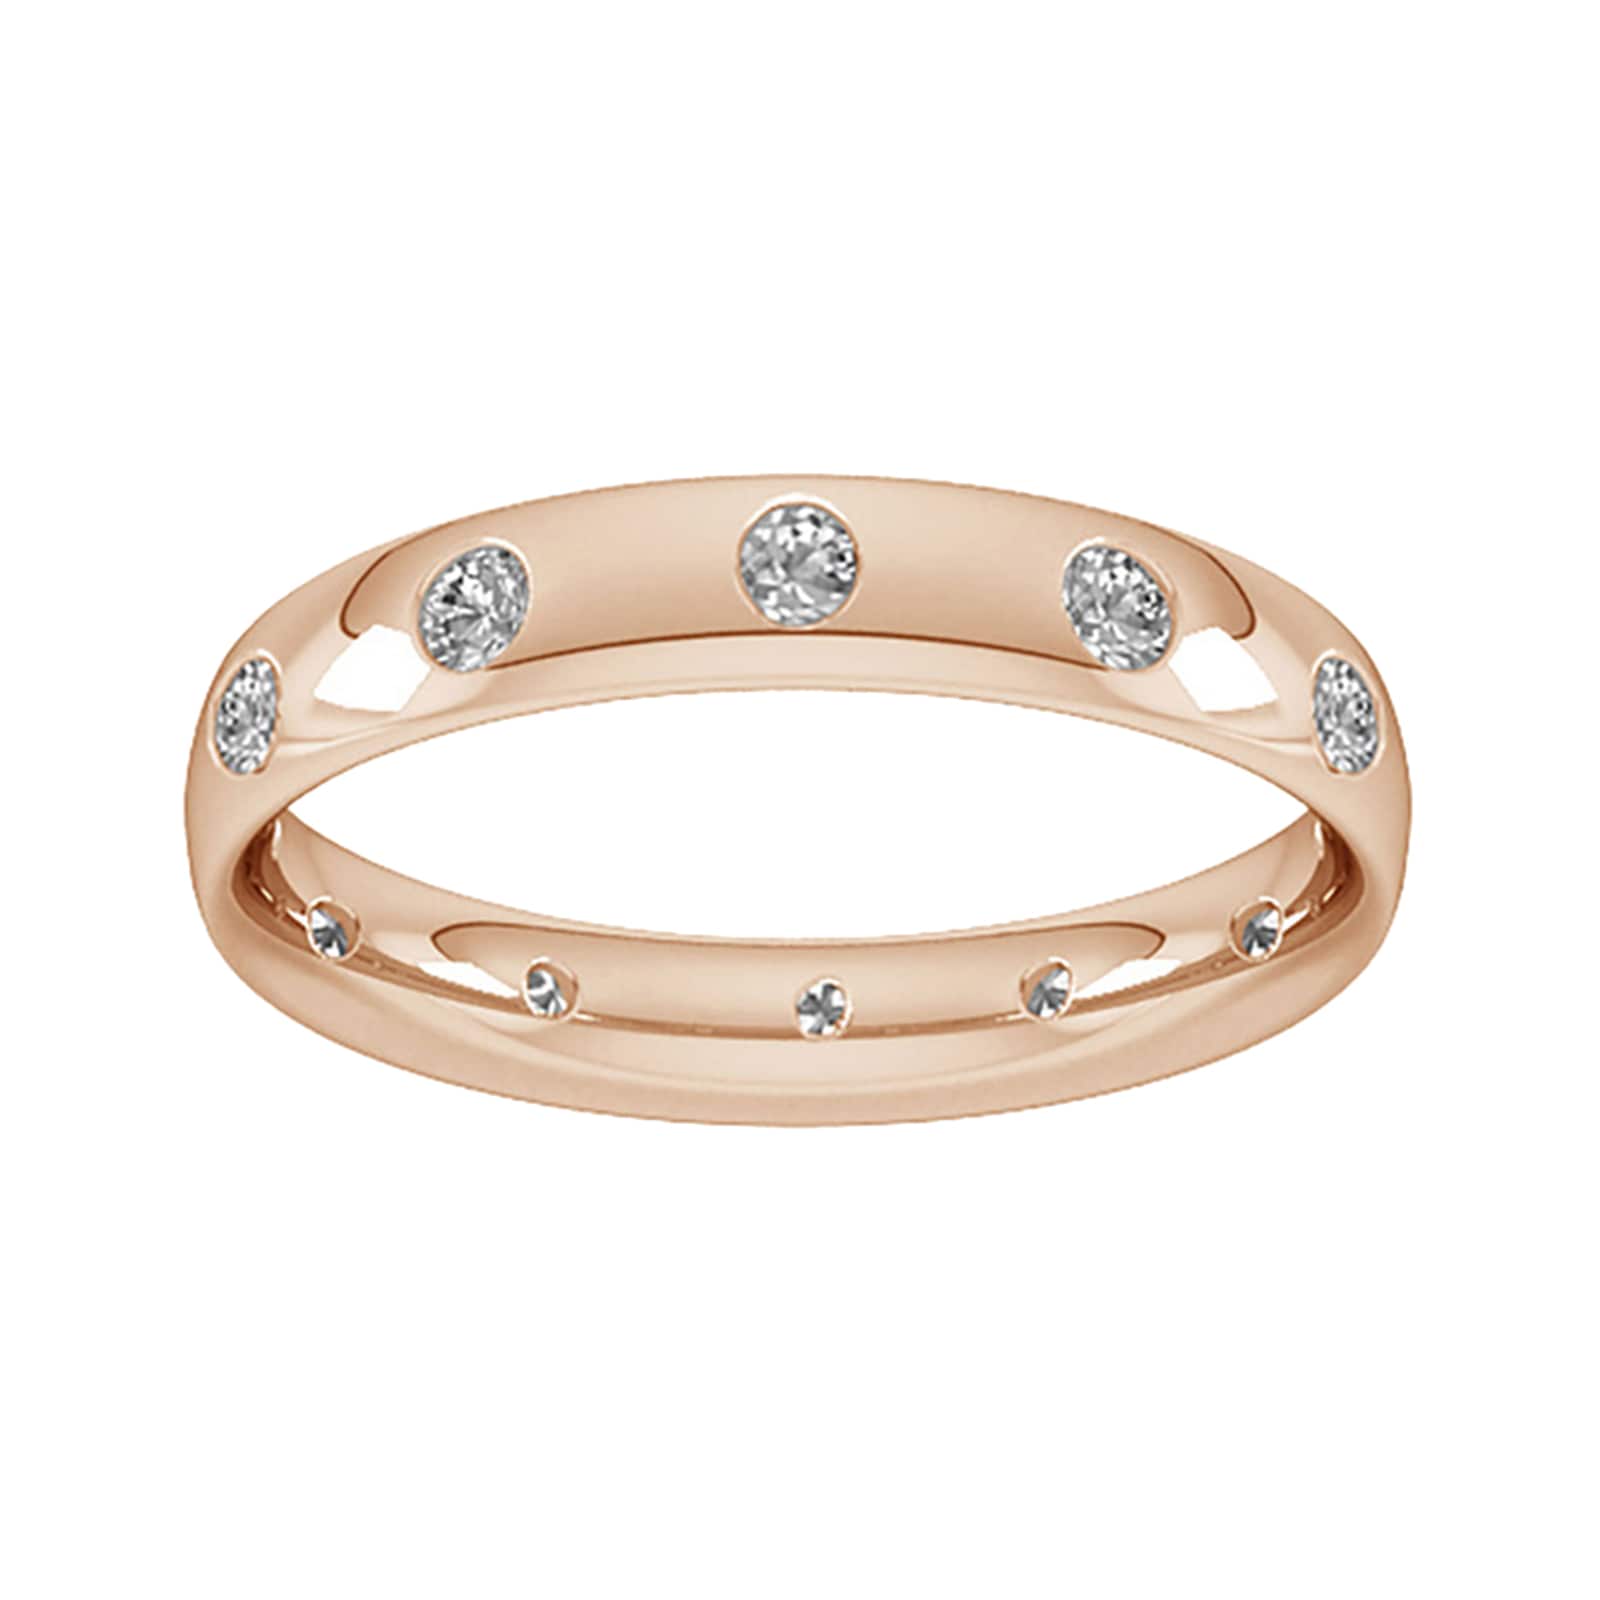 3mm 0.33 Carat Total Weight Twelve Stone Brilliant Cut Rub Over Diamond Set Wedding Ring In 18 Carat Rose Gold - Ring Size J